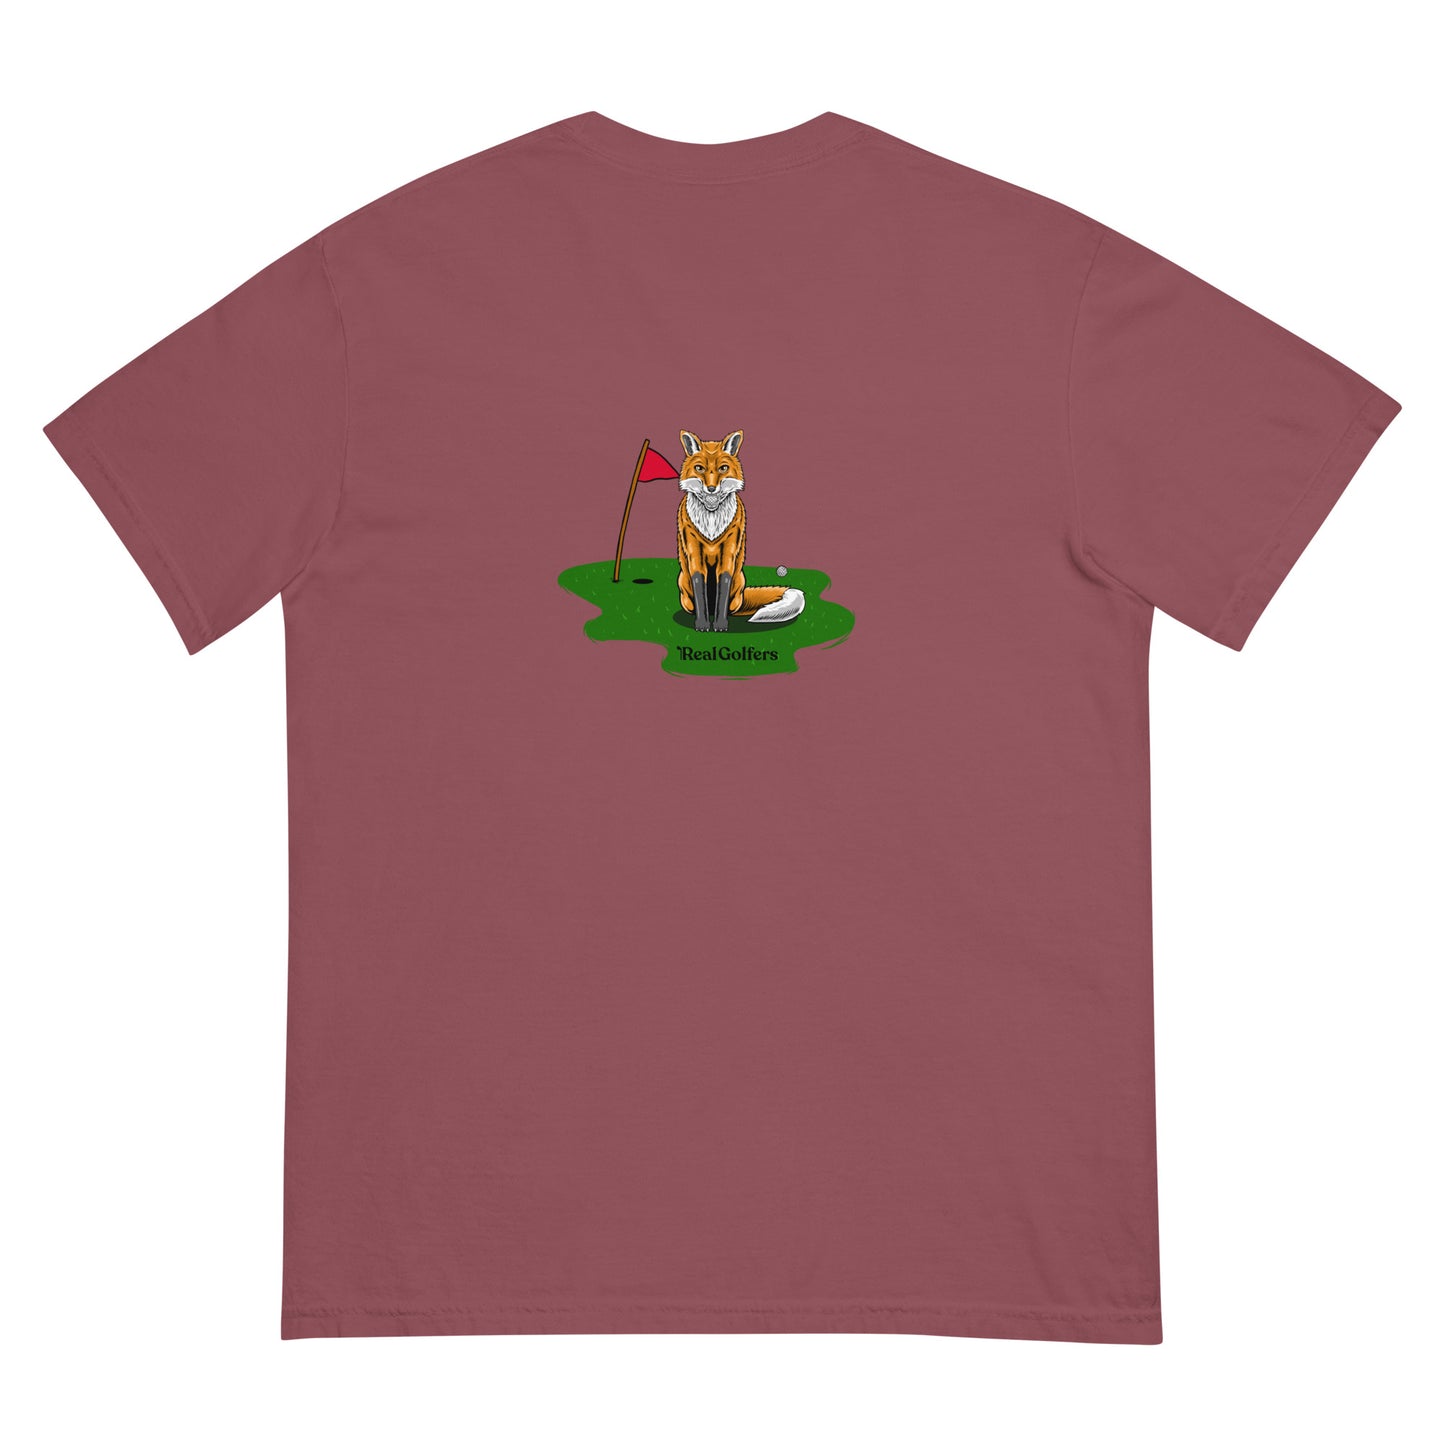 Muni Fox T-Shirt